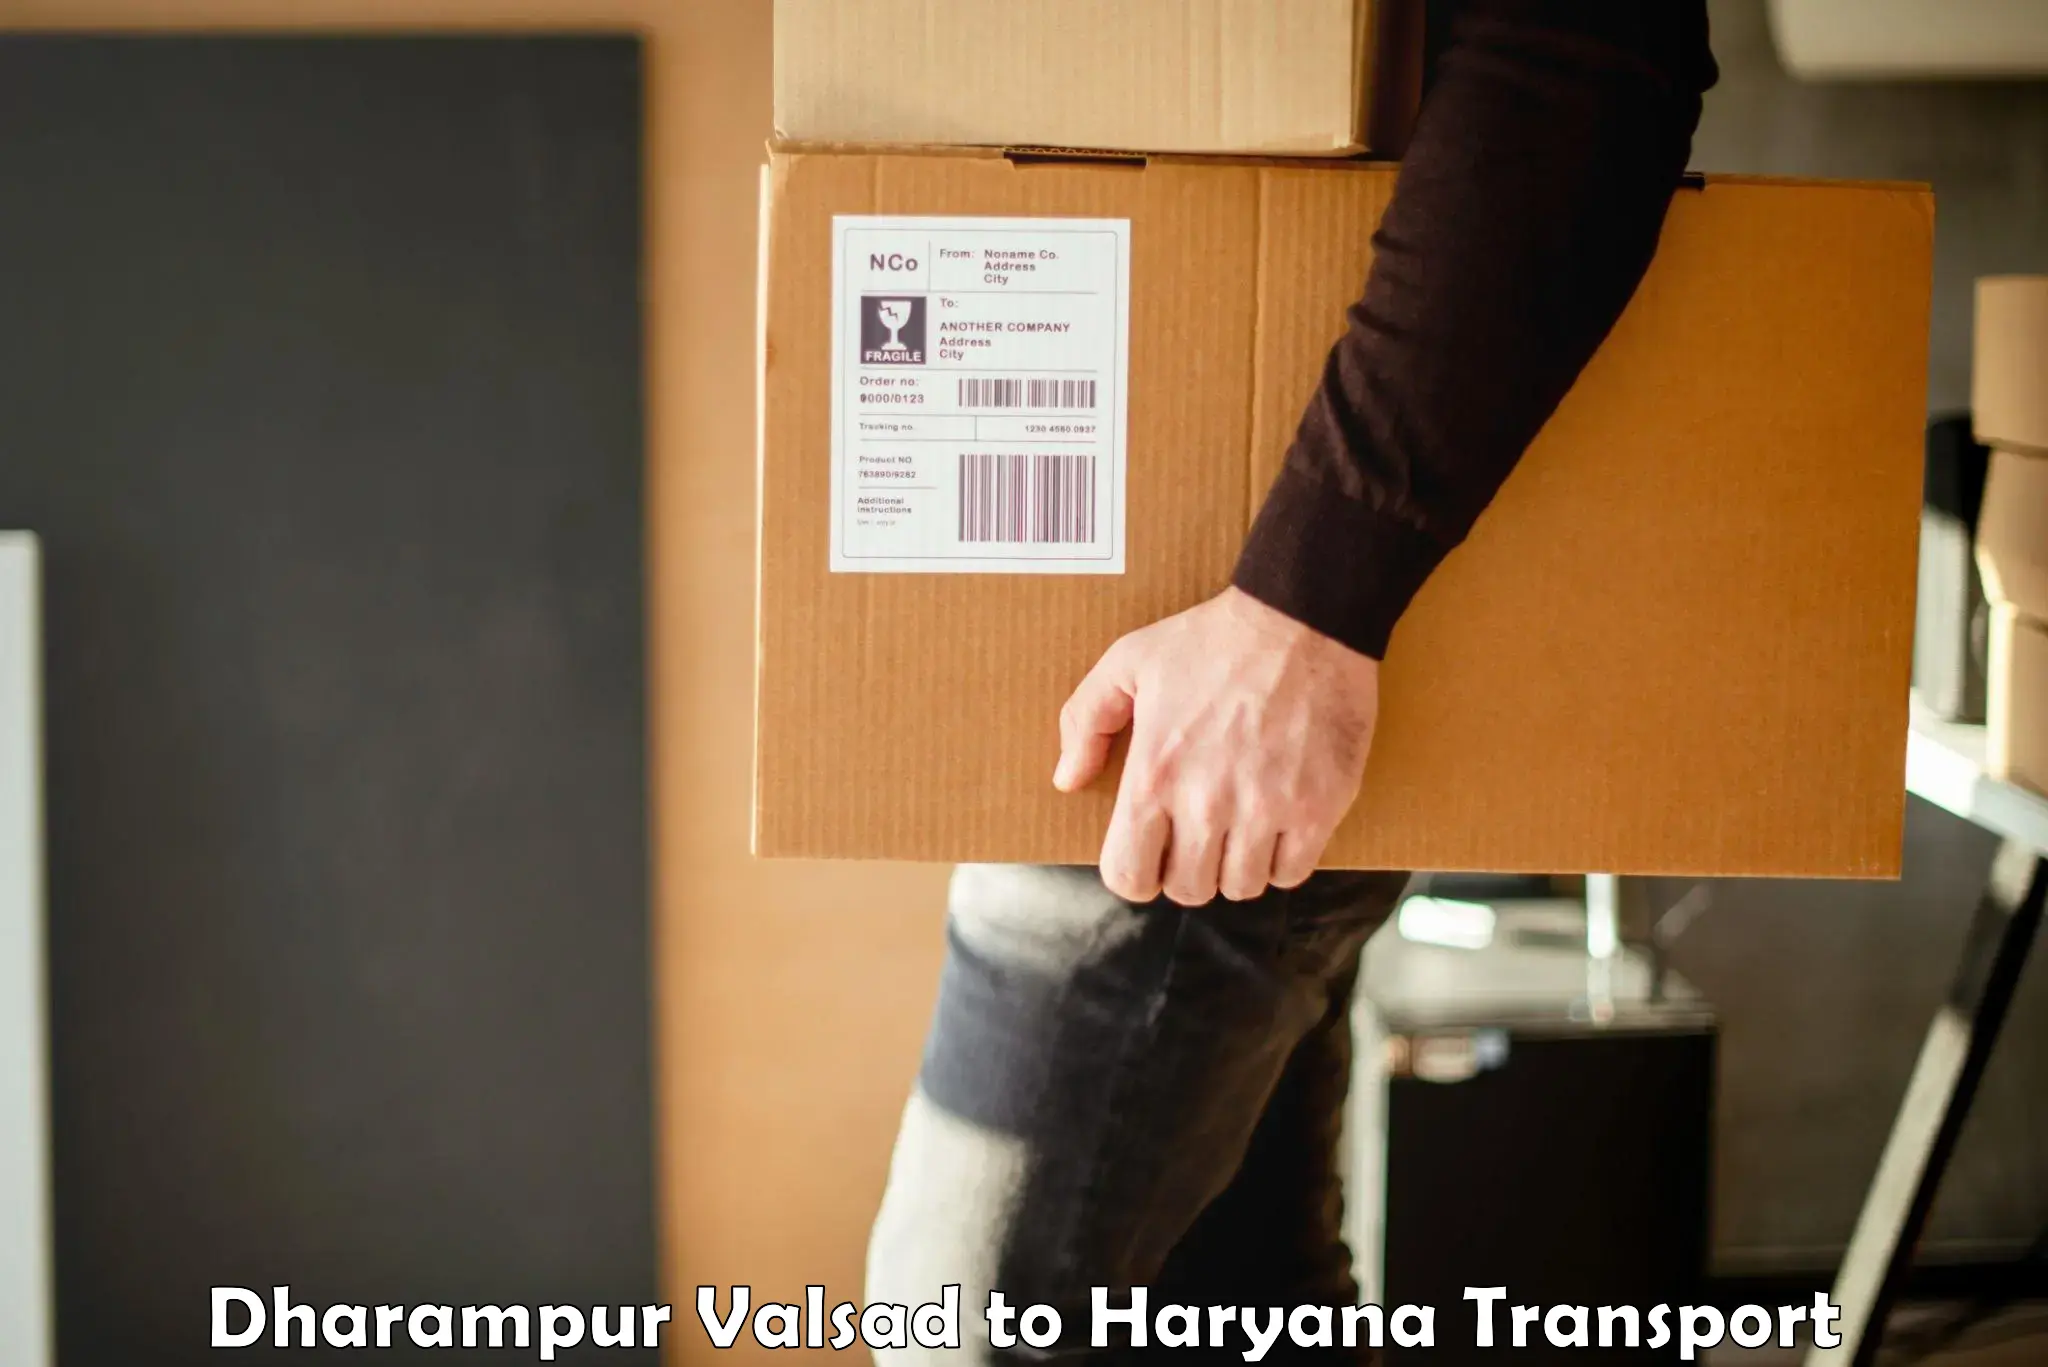 Cargo transportation services Dharampur Valsad to Gurgaon